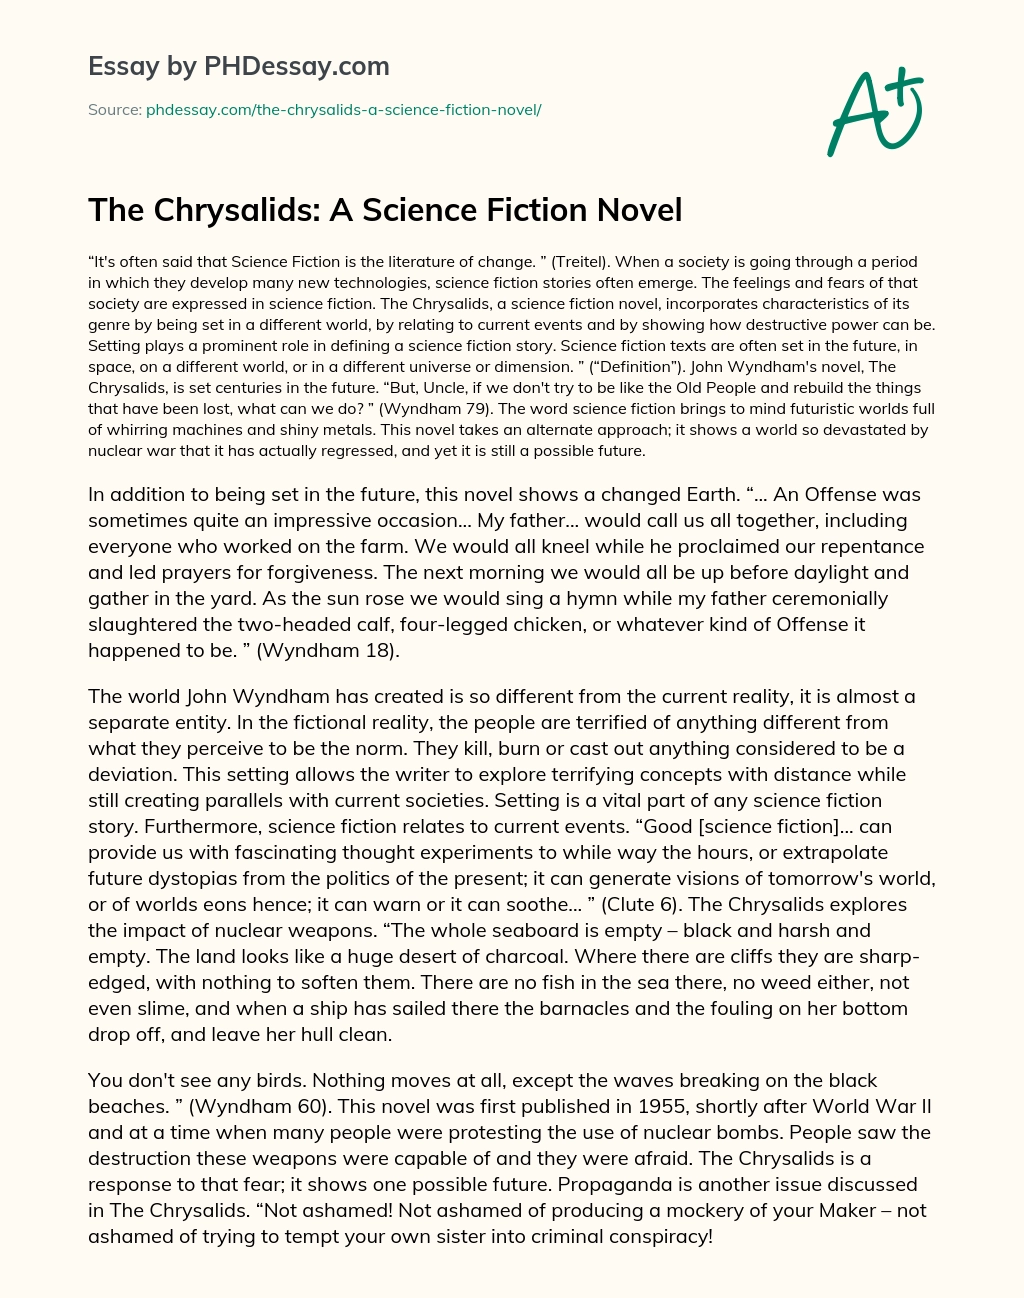 The Chrysalids: A Science Fiction Novel essay